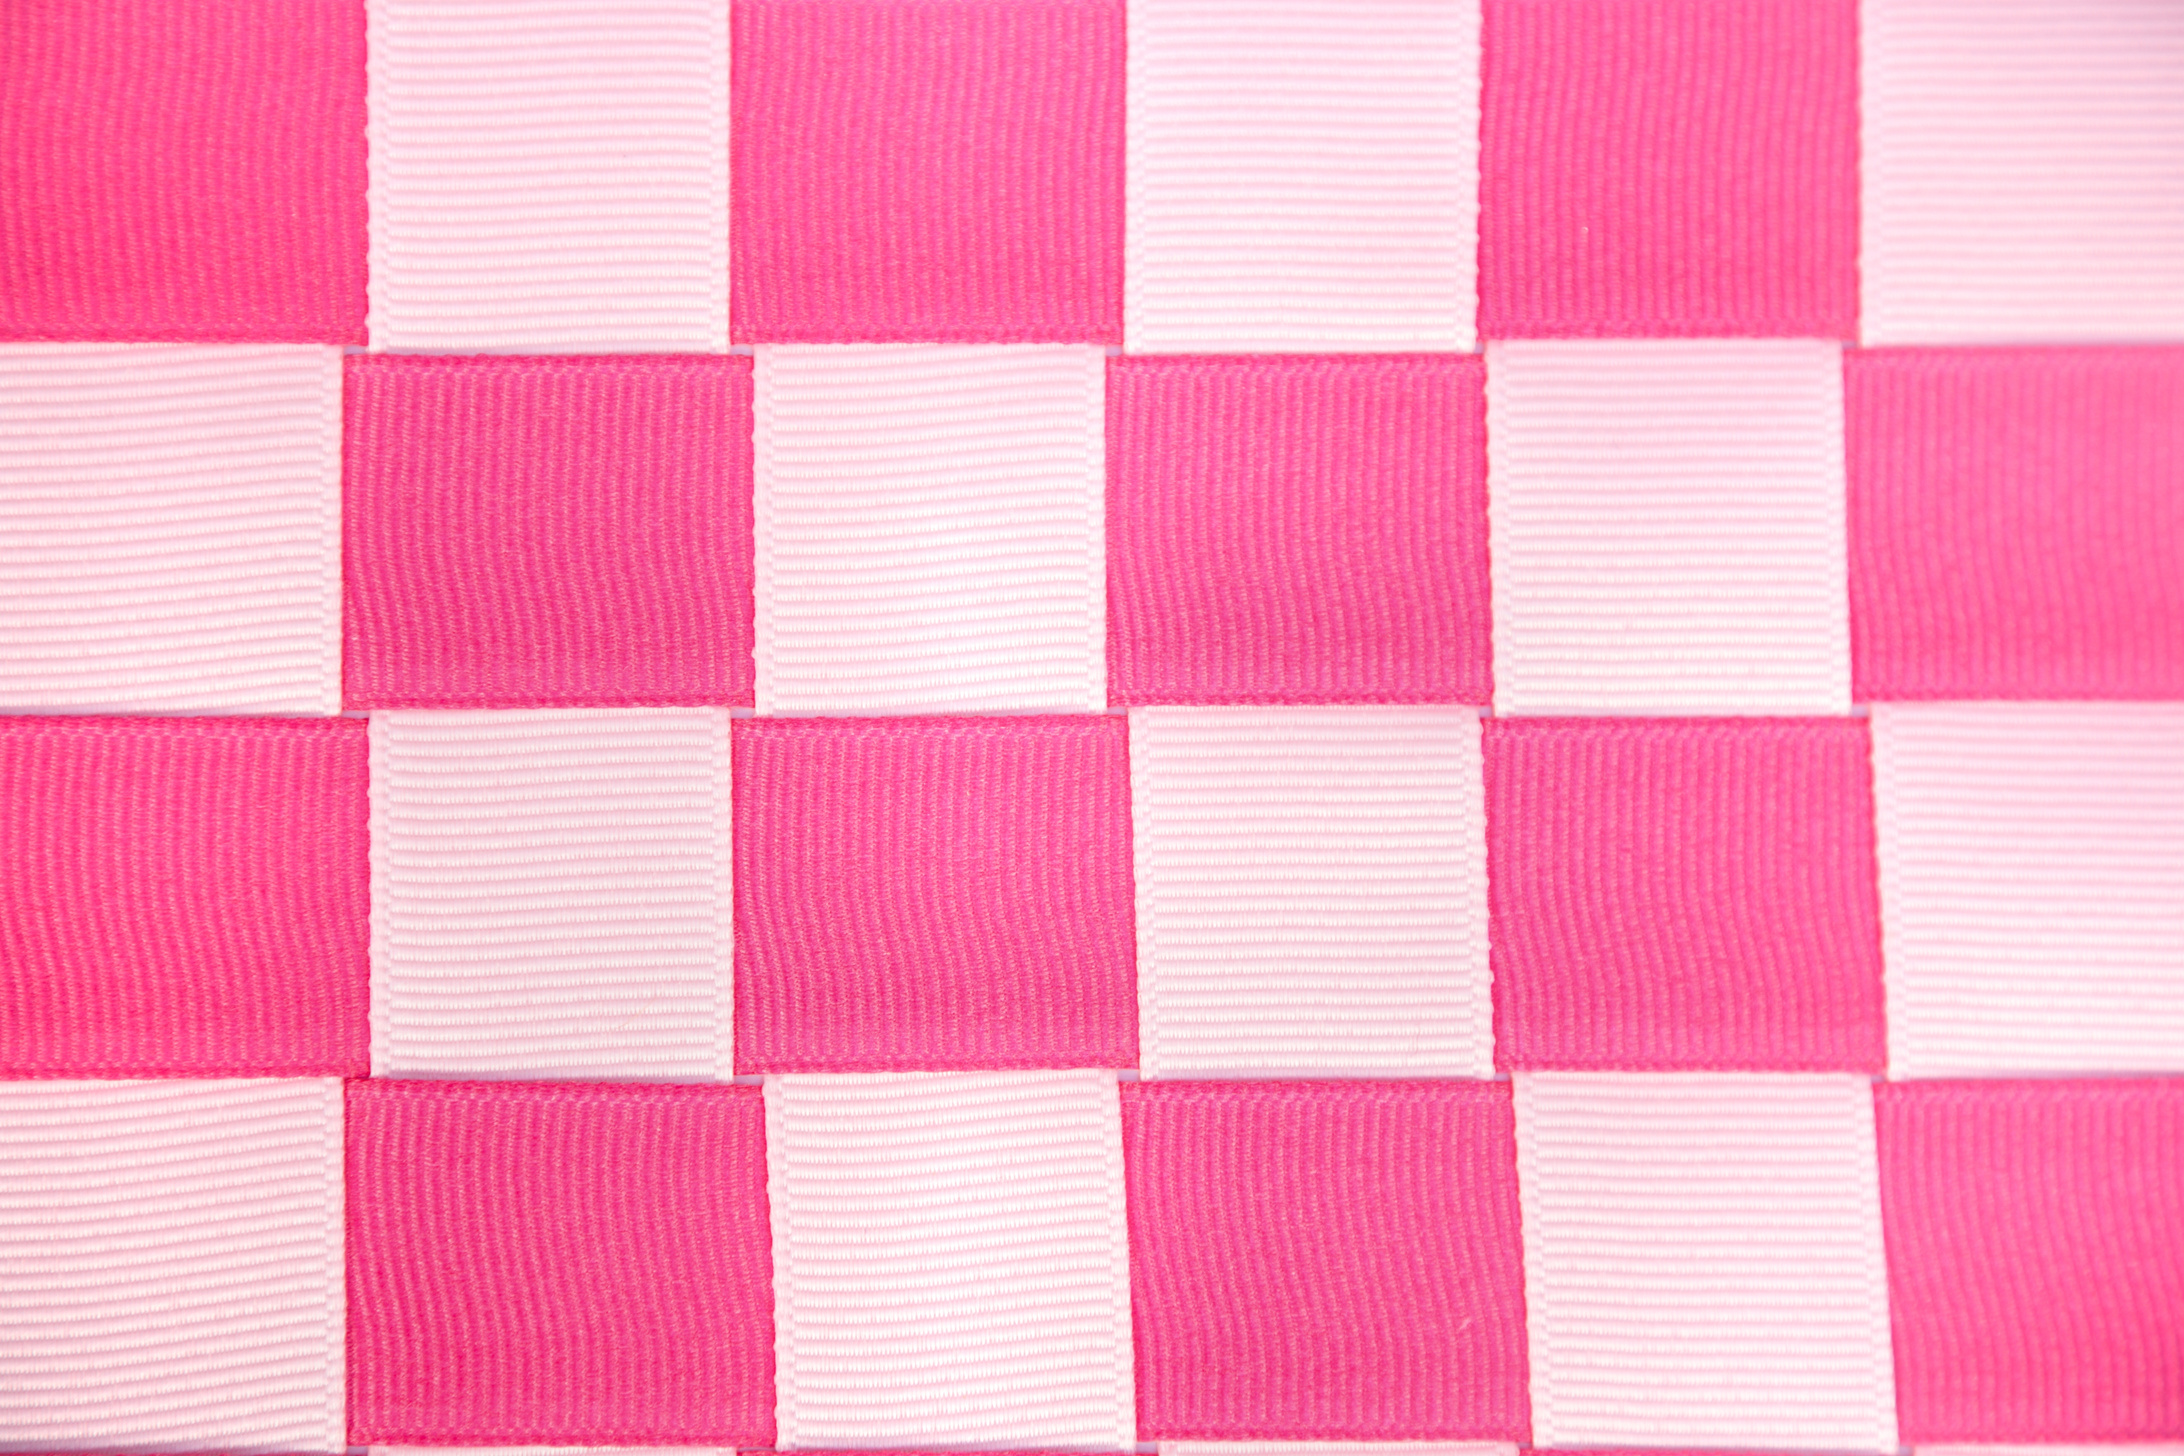 Pink Checkered Background